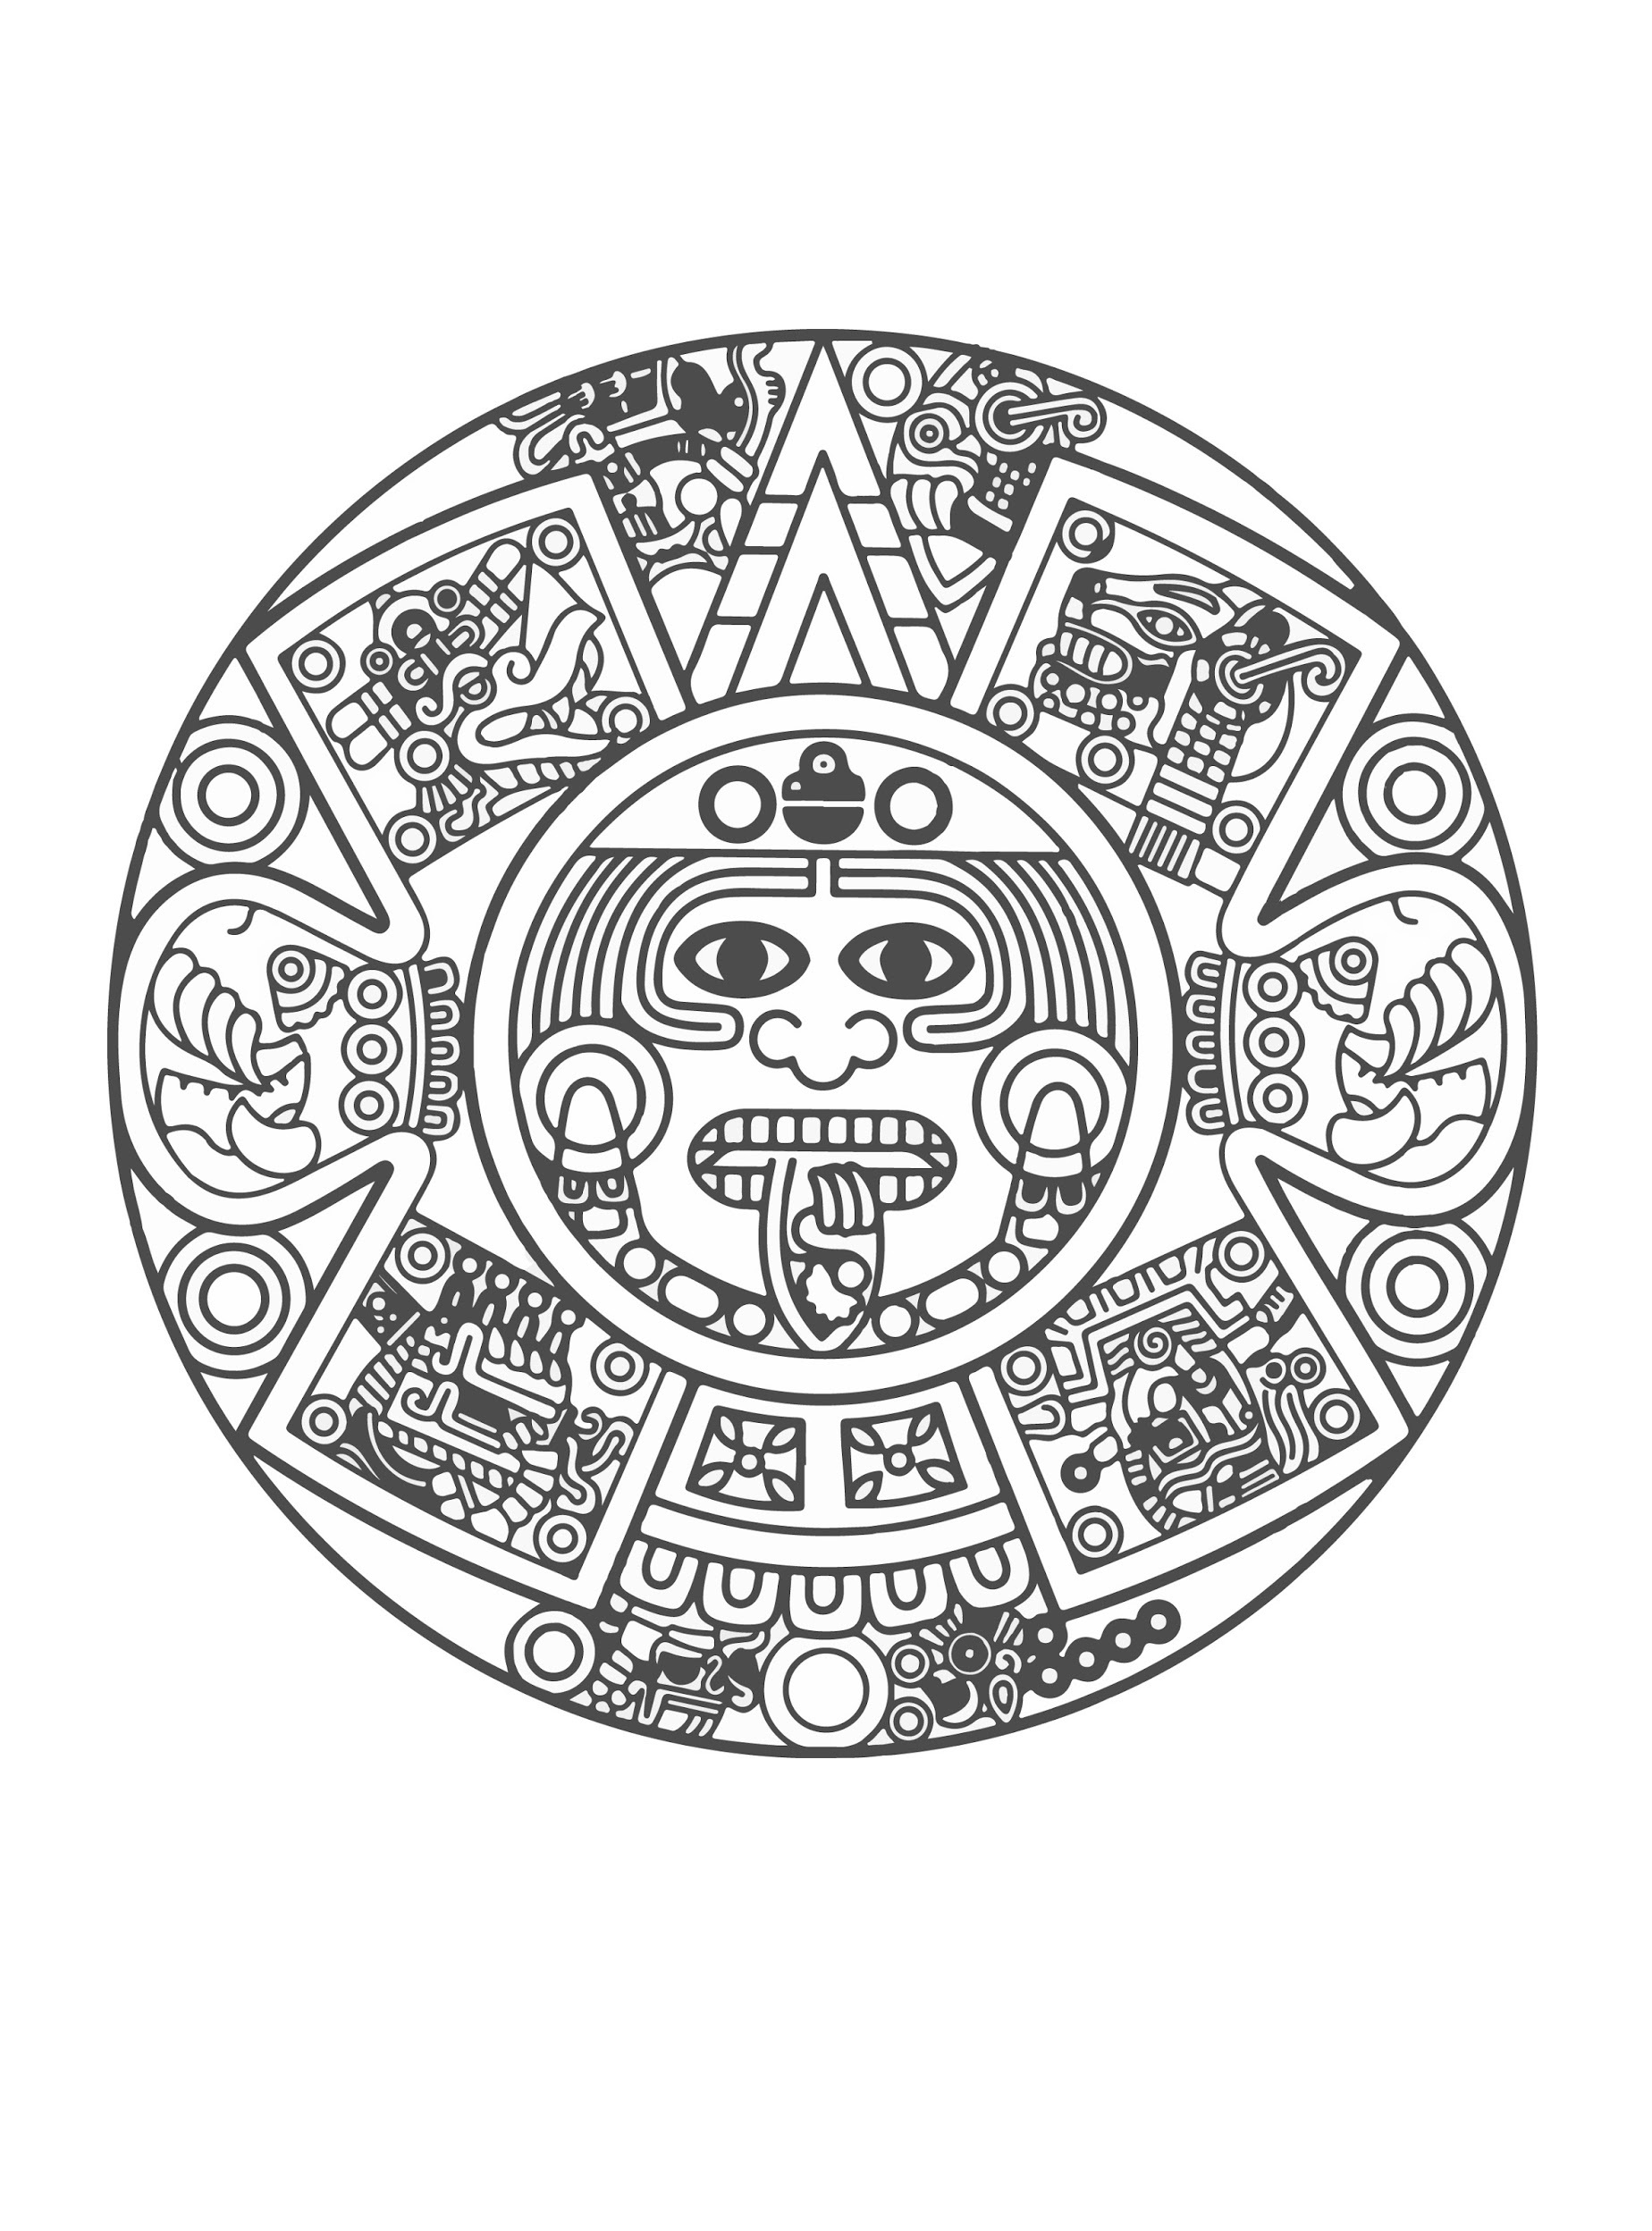 Aztec Coloring Pages Pdf to Print - Calendar Aztec Coloring Pages